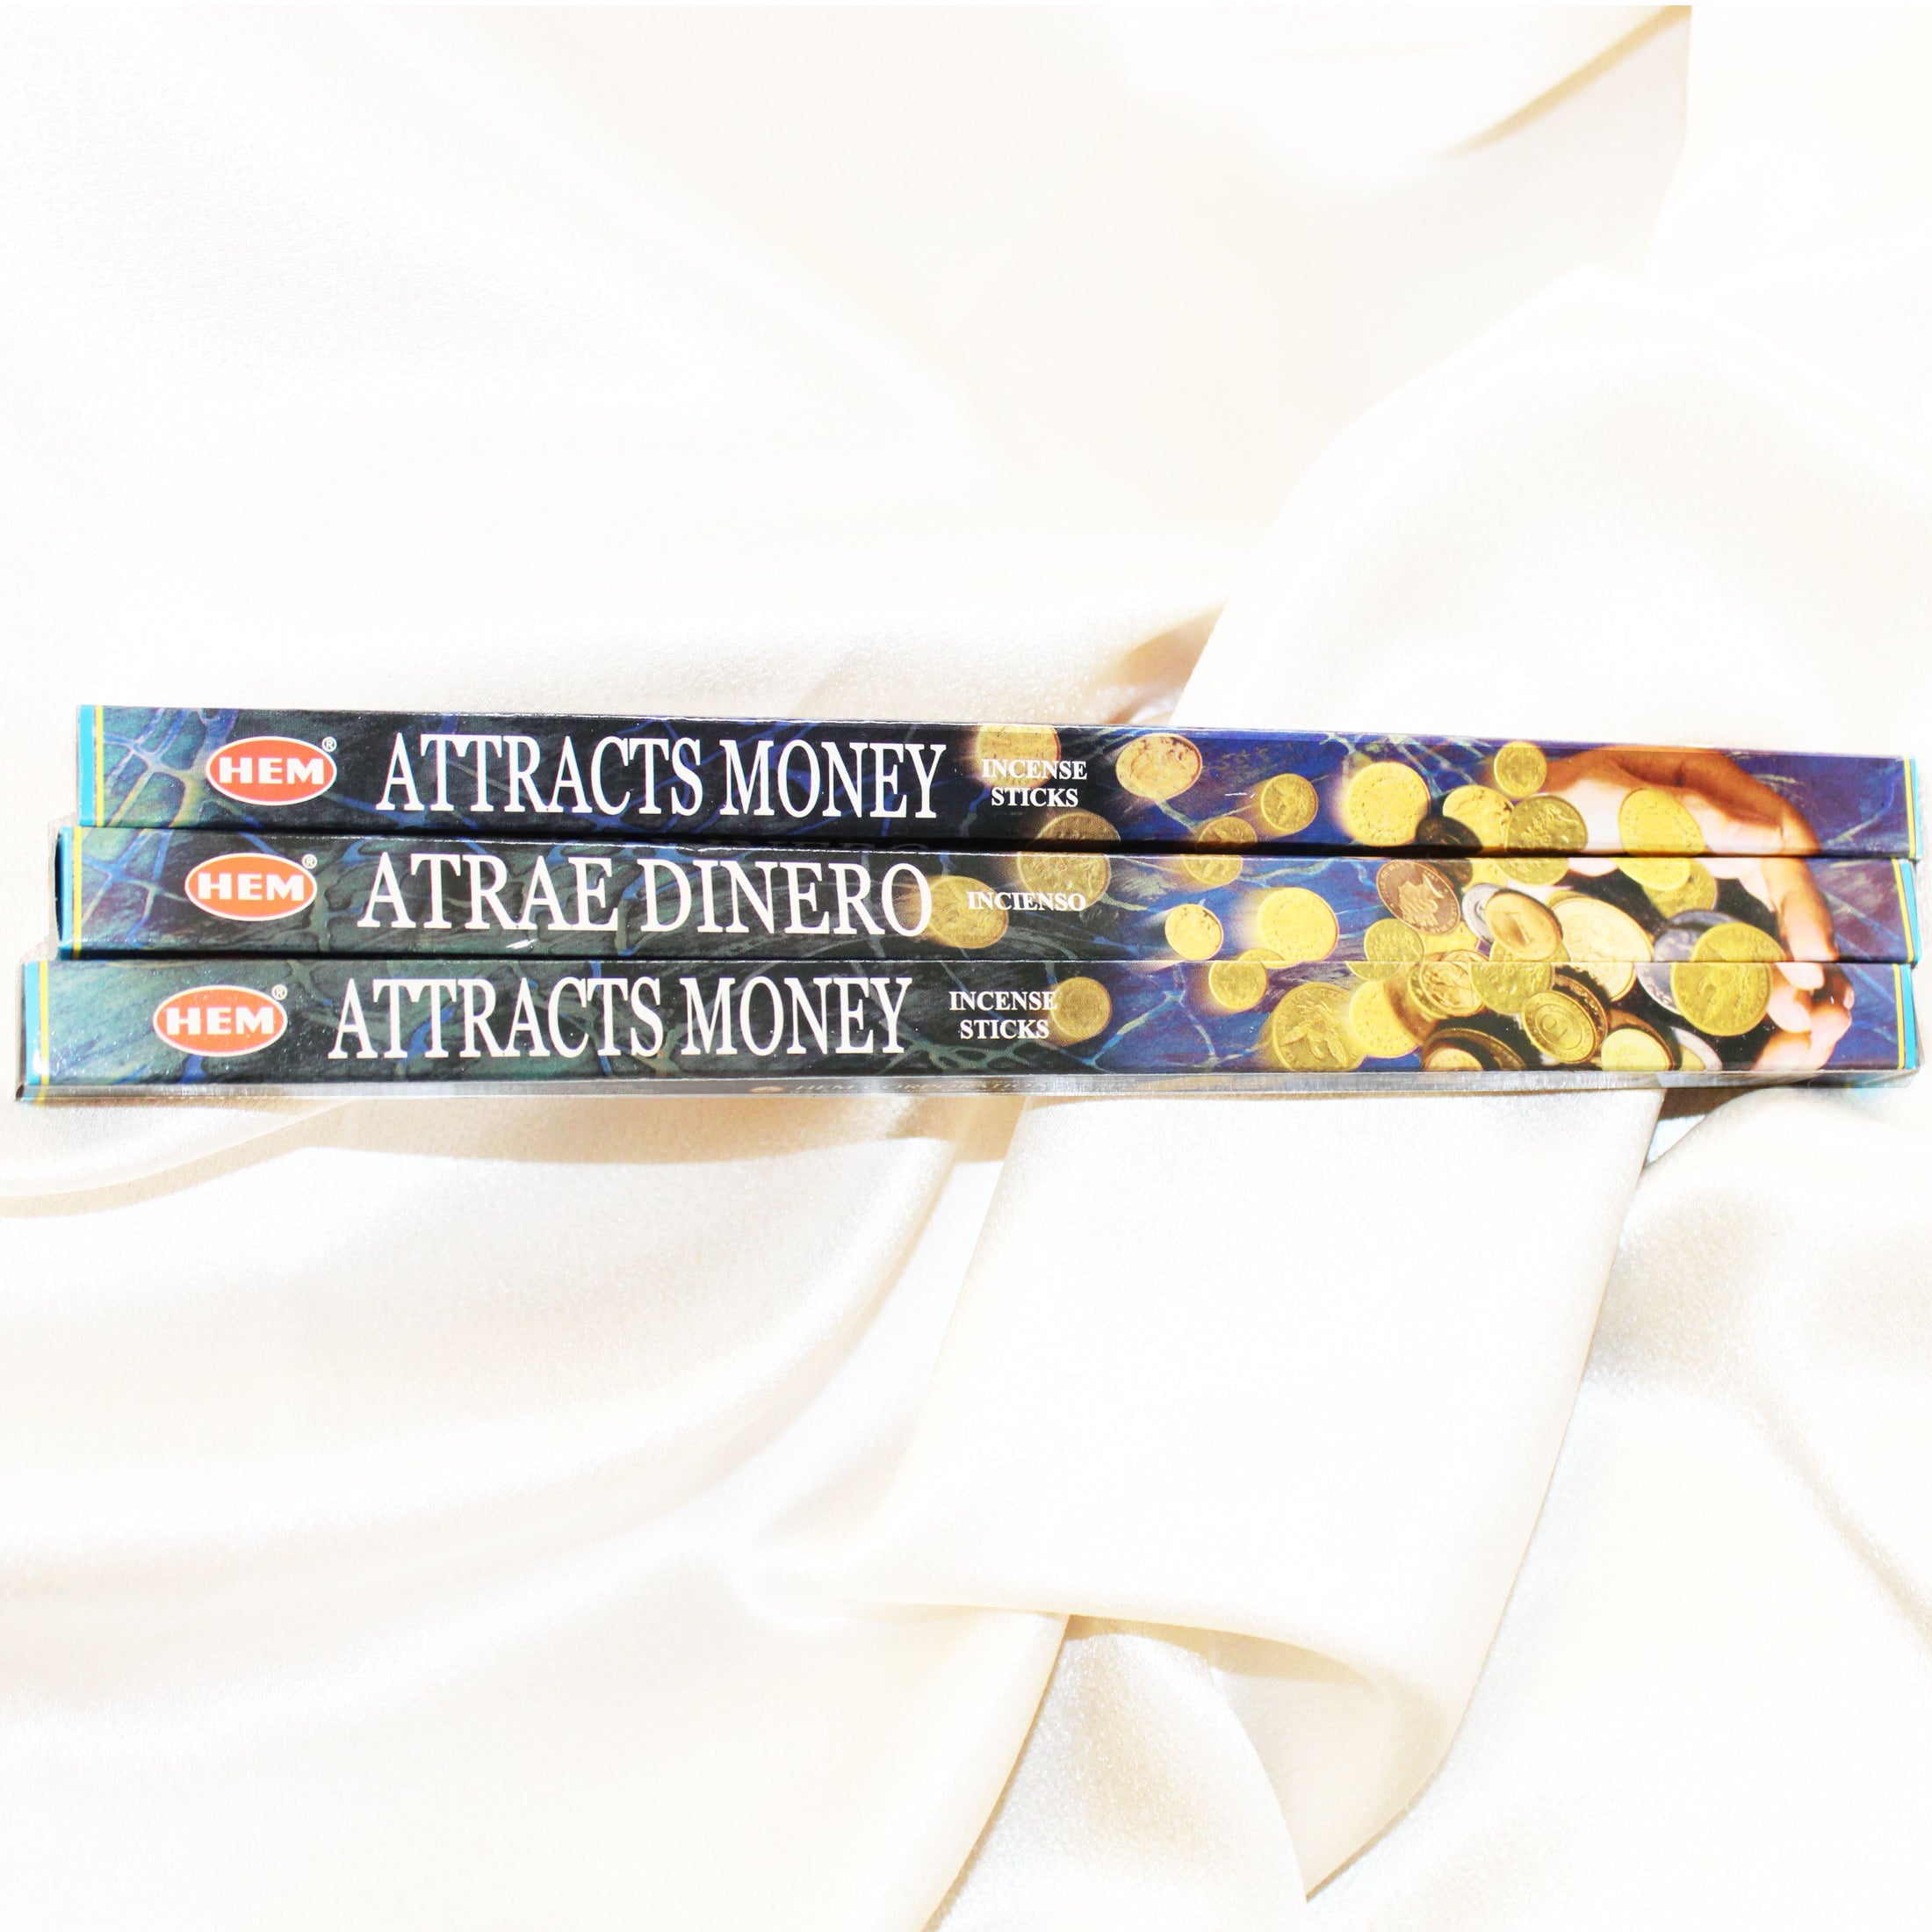 Hem- Attracts Money (Atrae Dinero) Incense (Incensio) Sticks